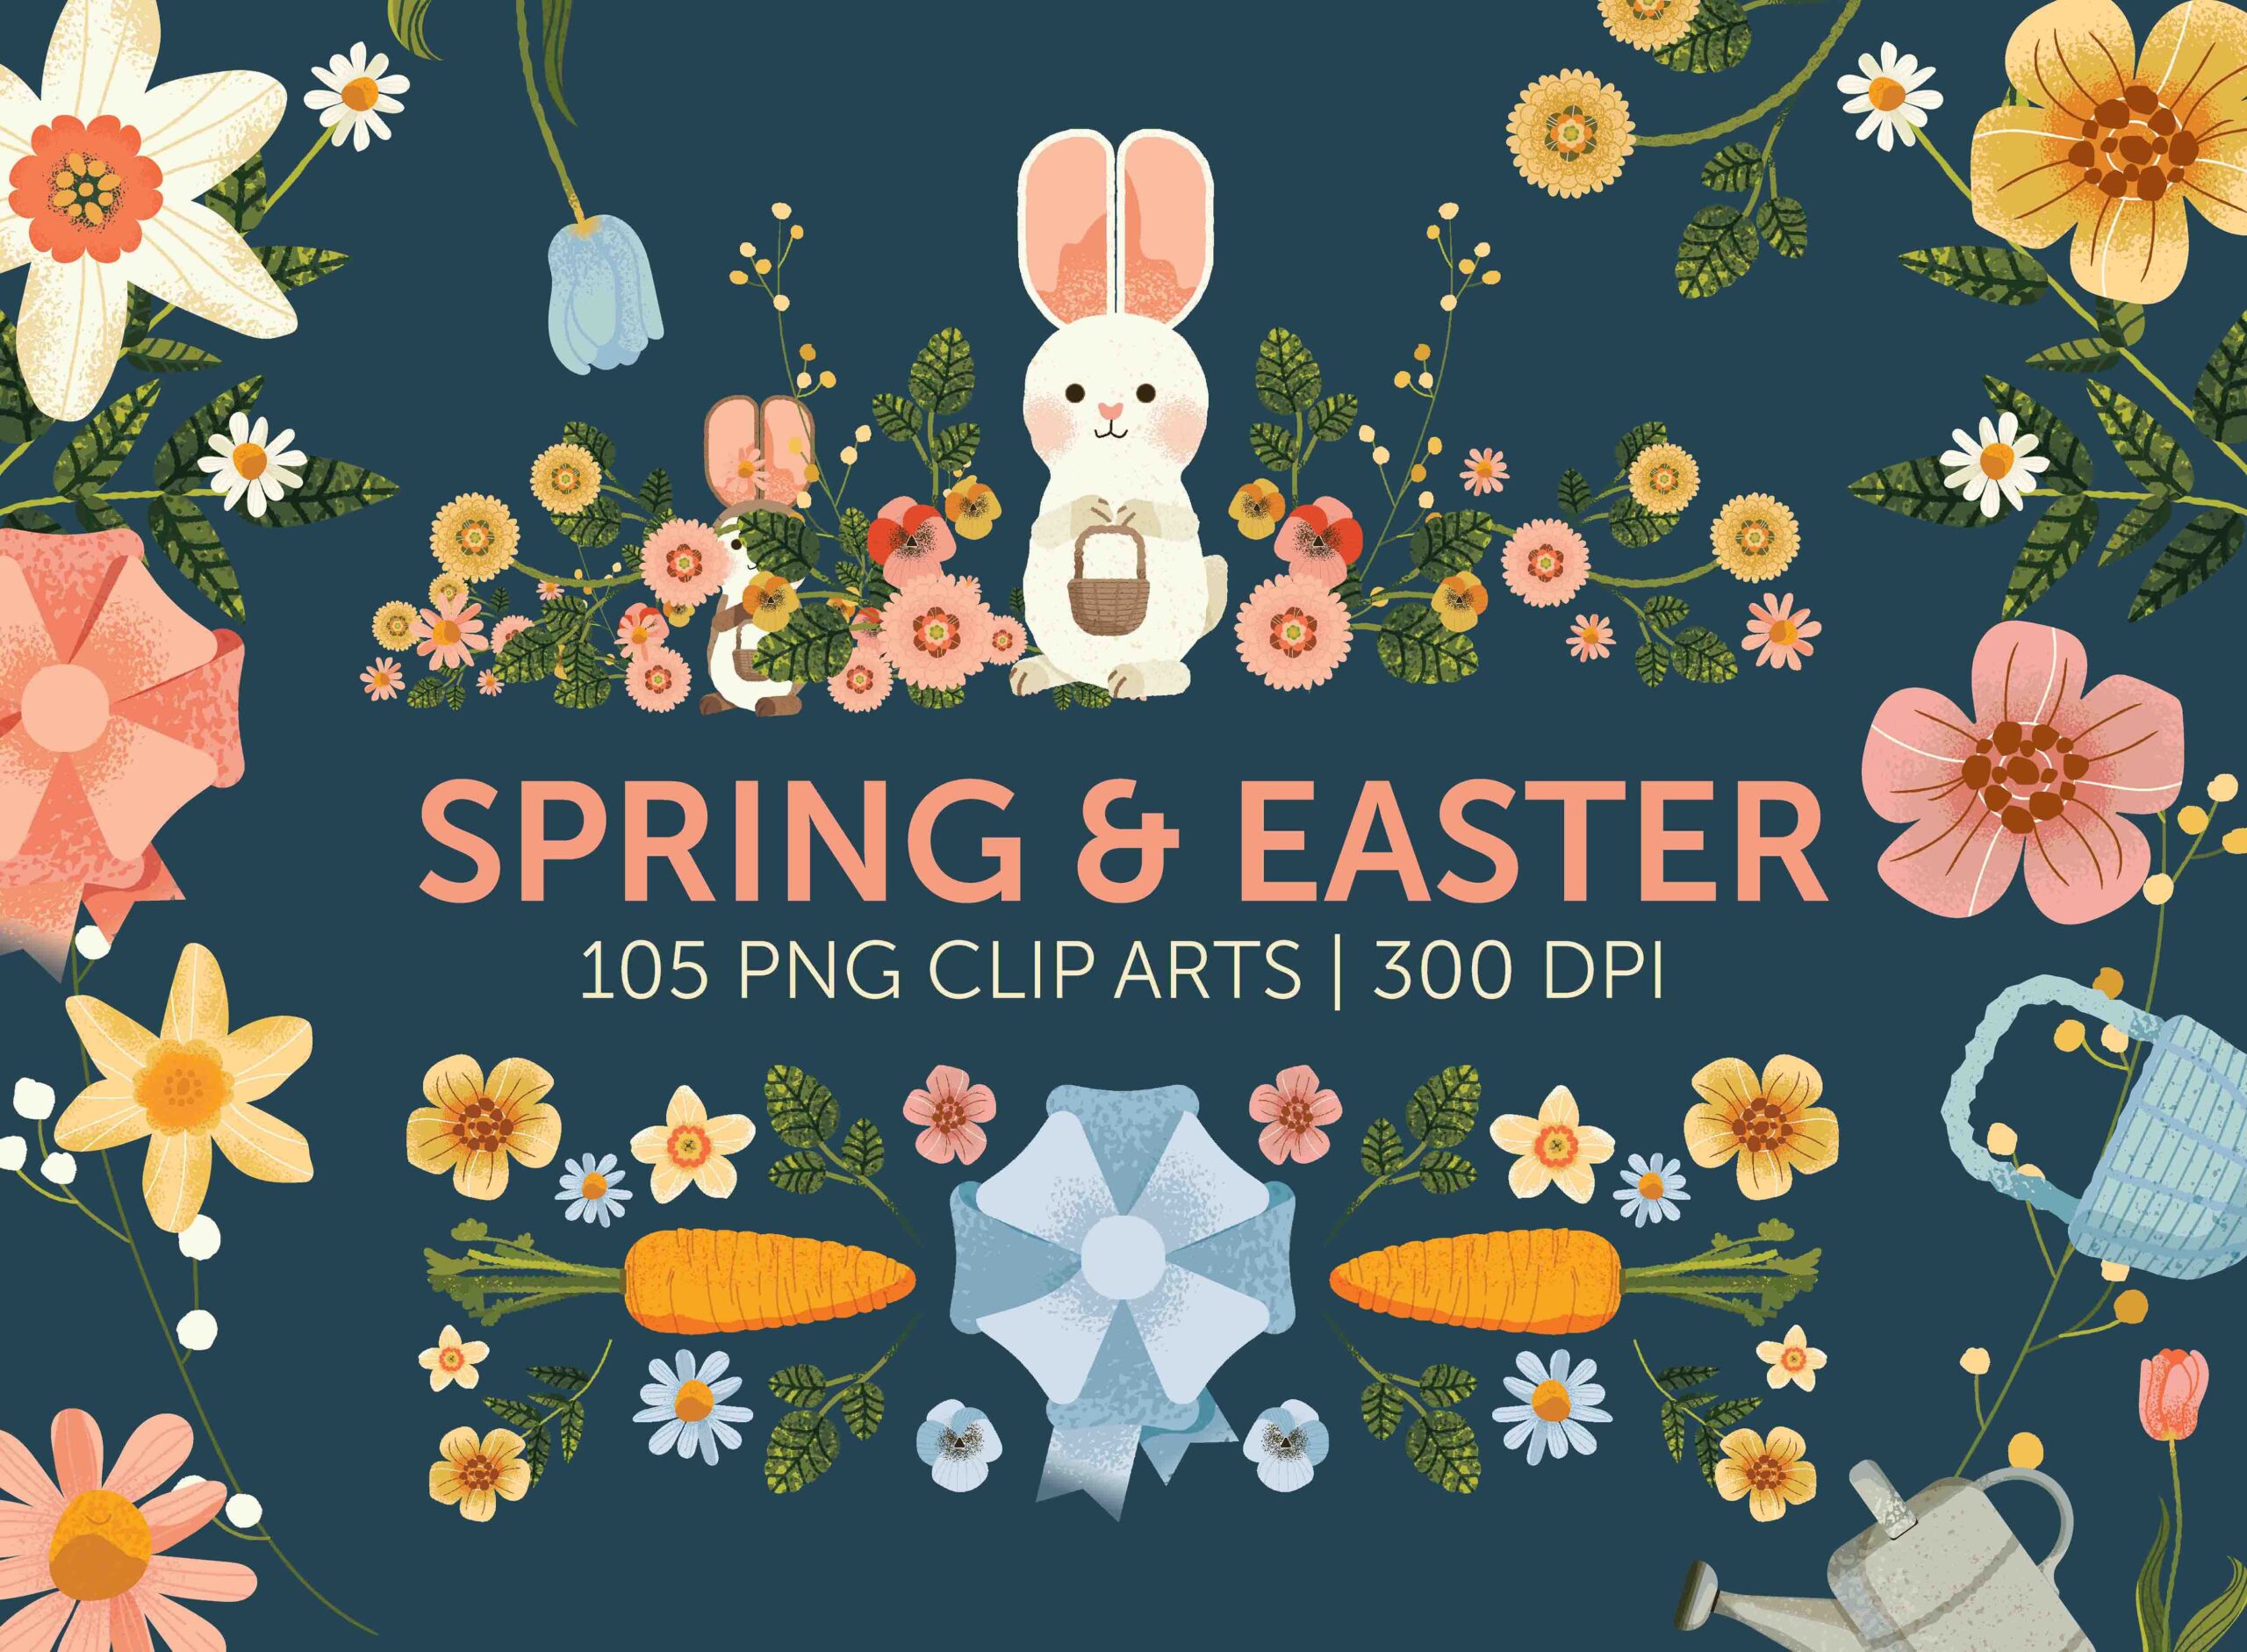 Easter-listing-lelinhtdigitals_Featured-Image-Spring-Clip-arts-Easter-PNG-files